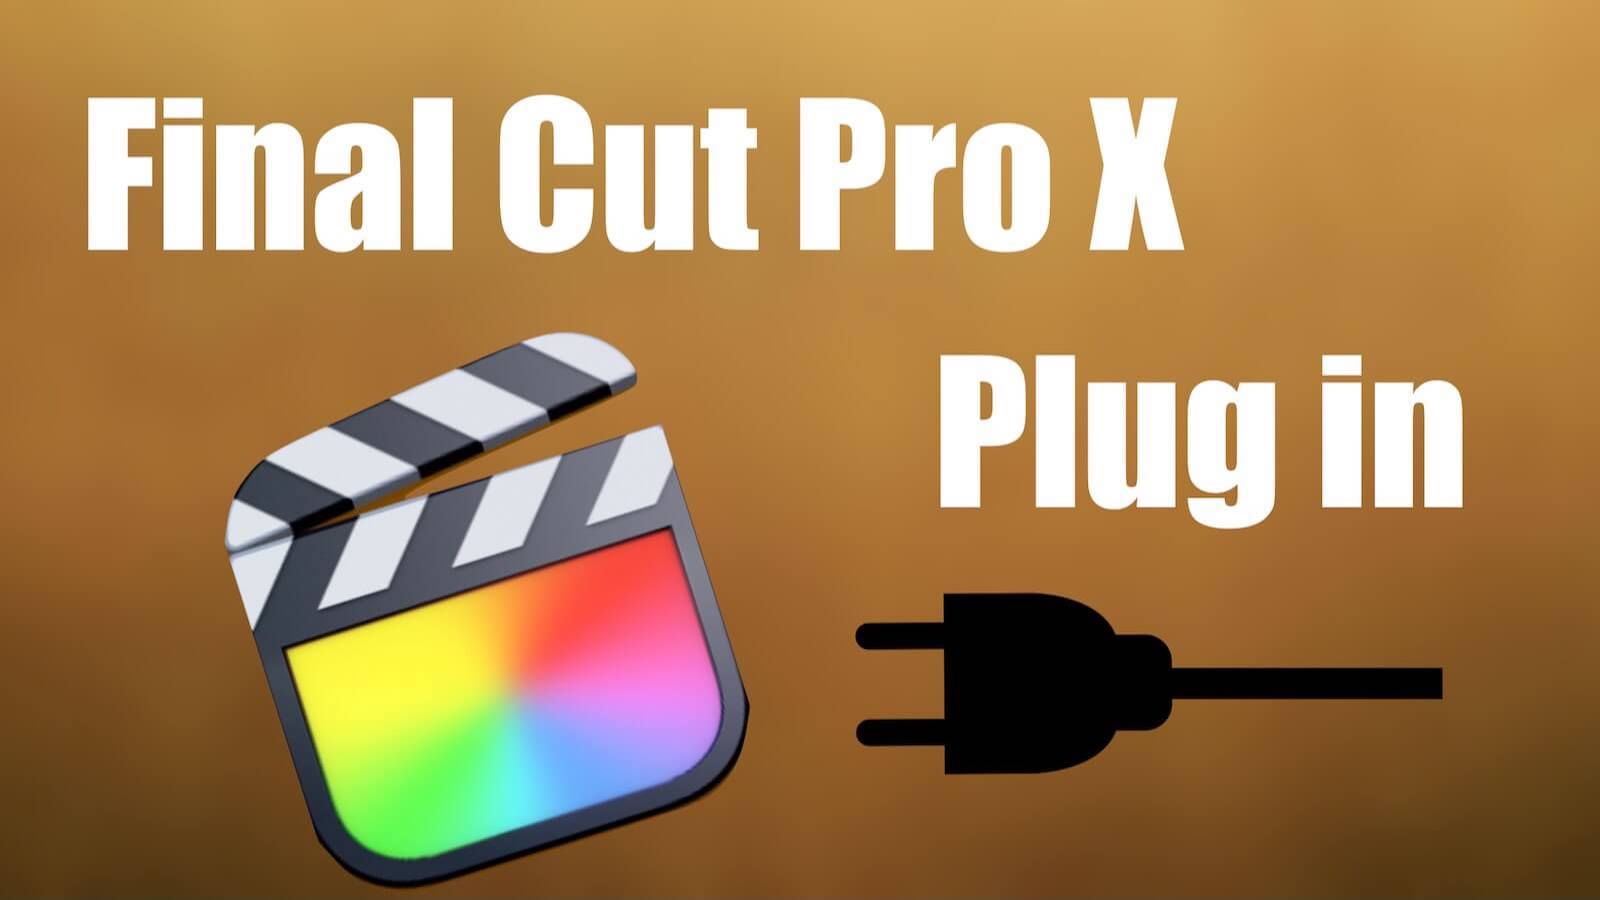 Description image of the Final Cut Pro plug-in